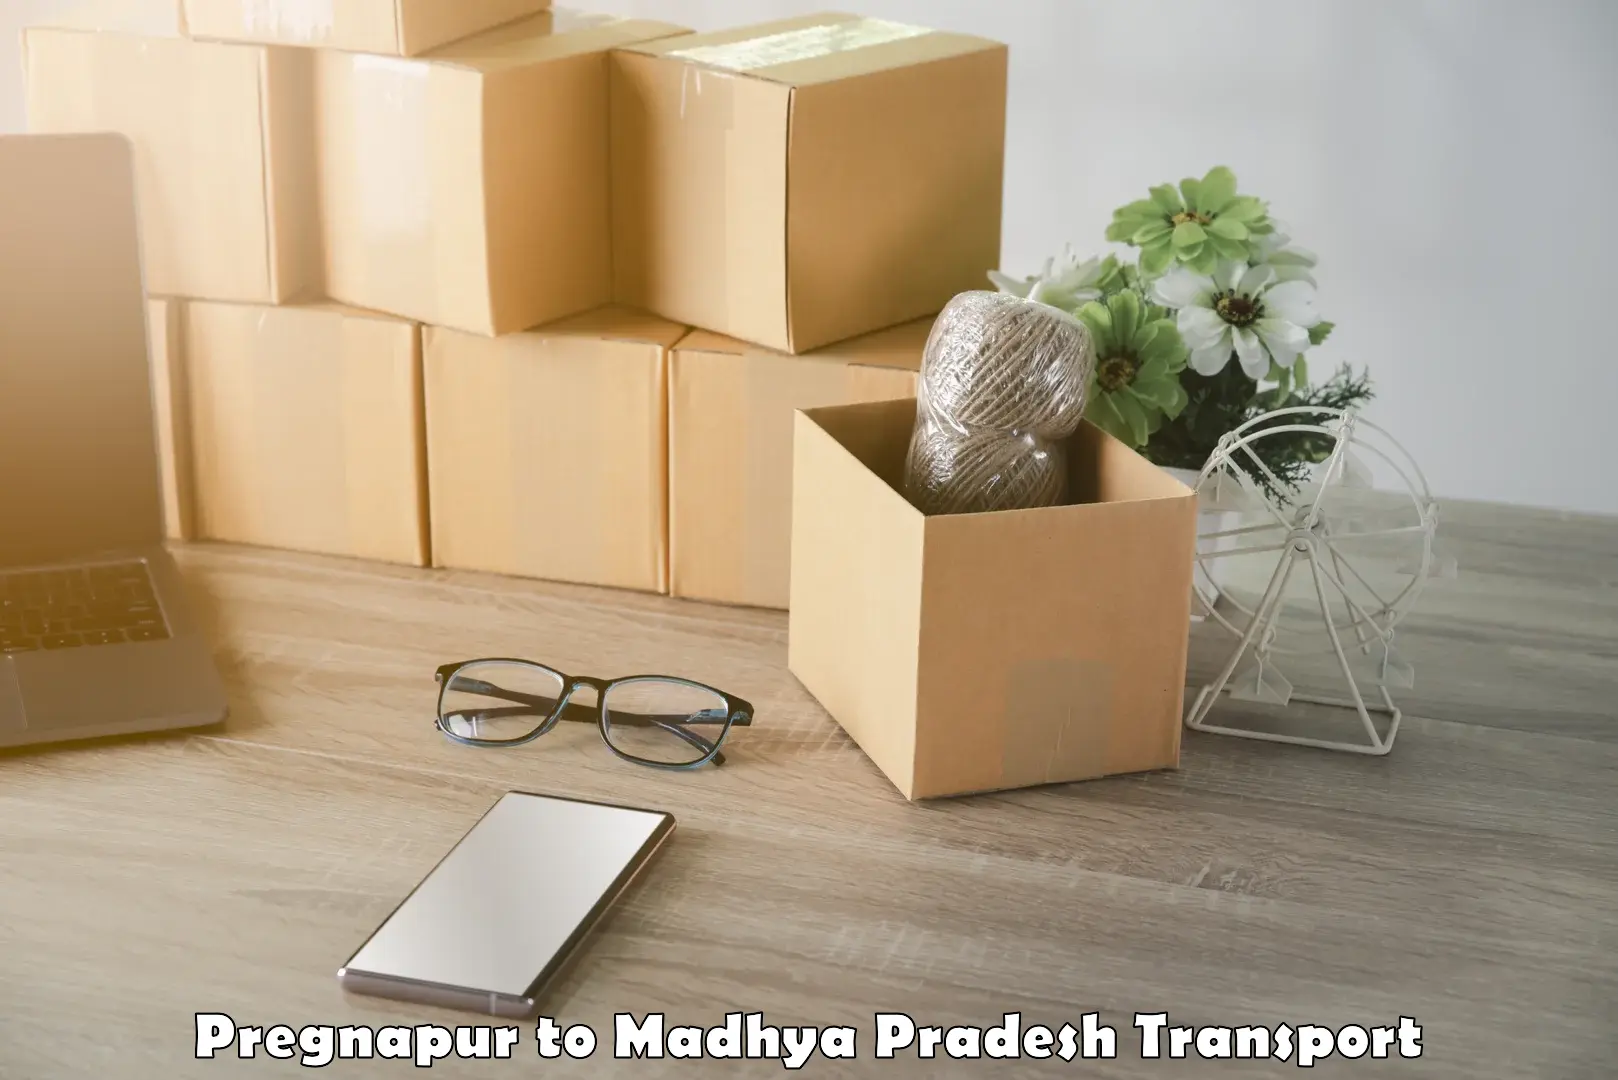 Daily parcel service transport Pregnapur to Agar